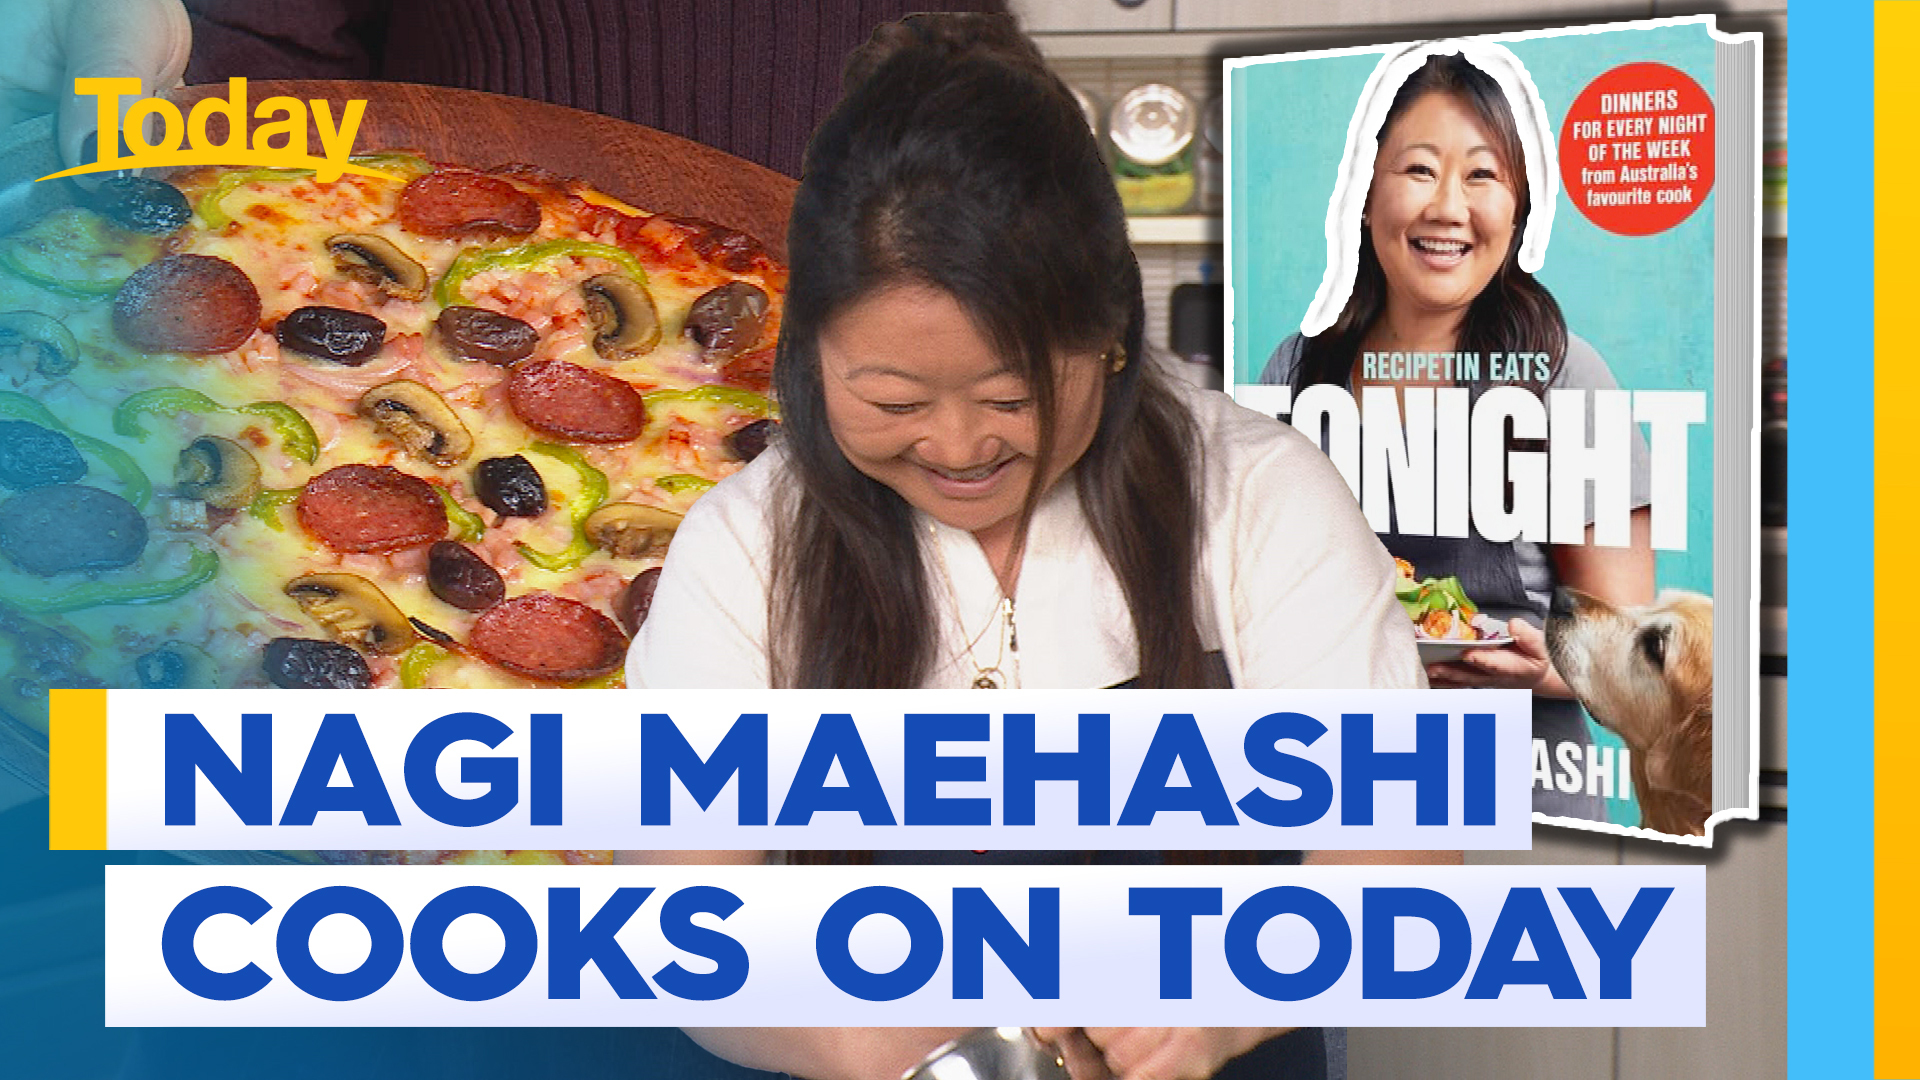 Nagi Maehashi catches up with Today